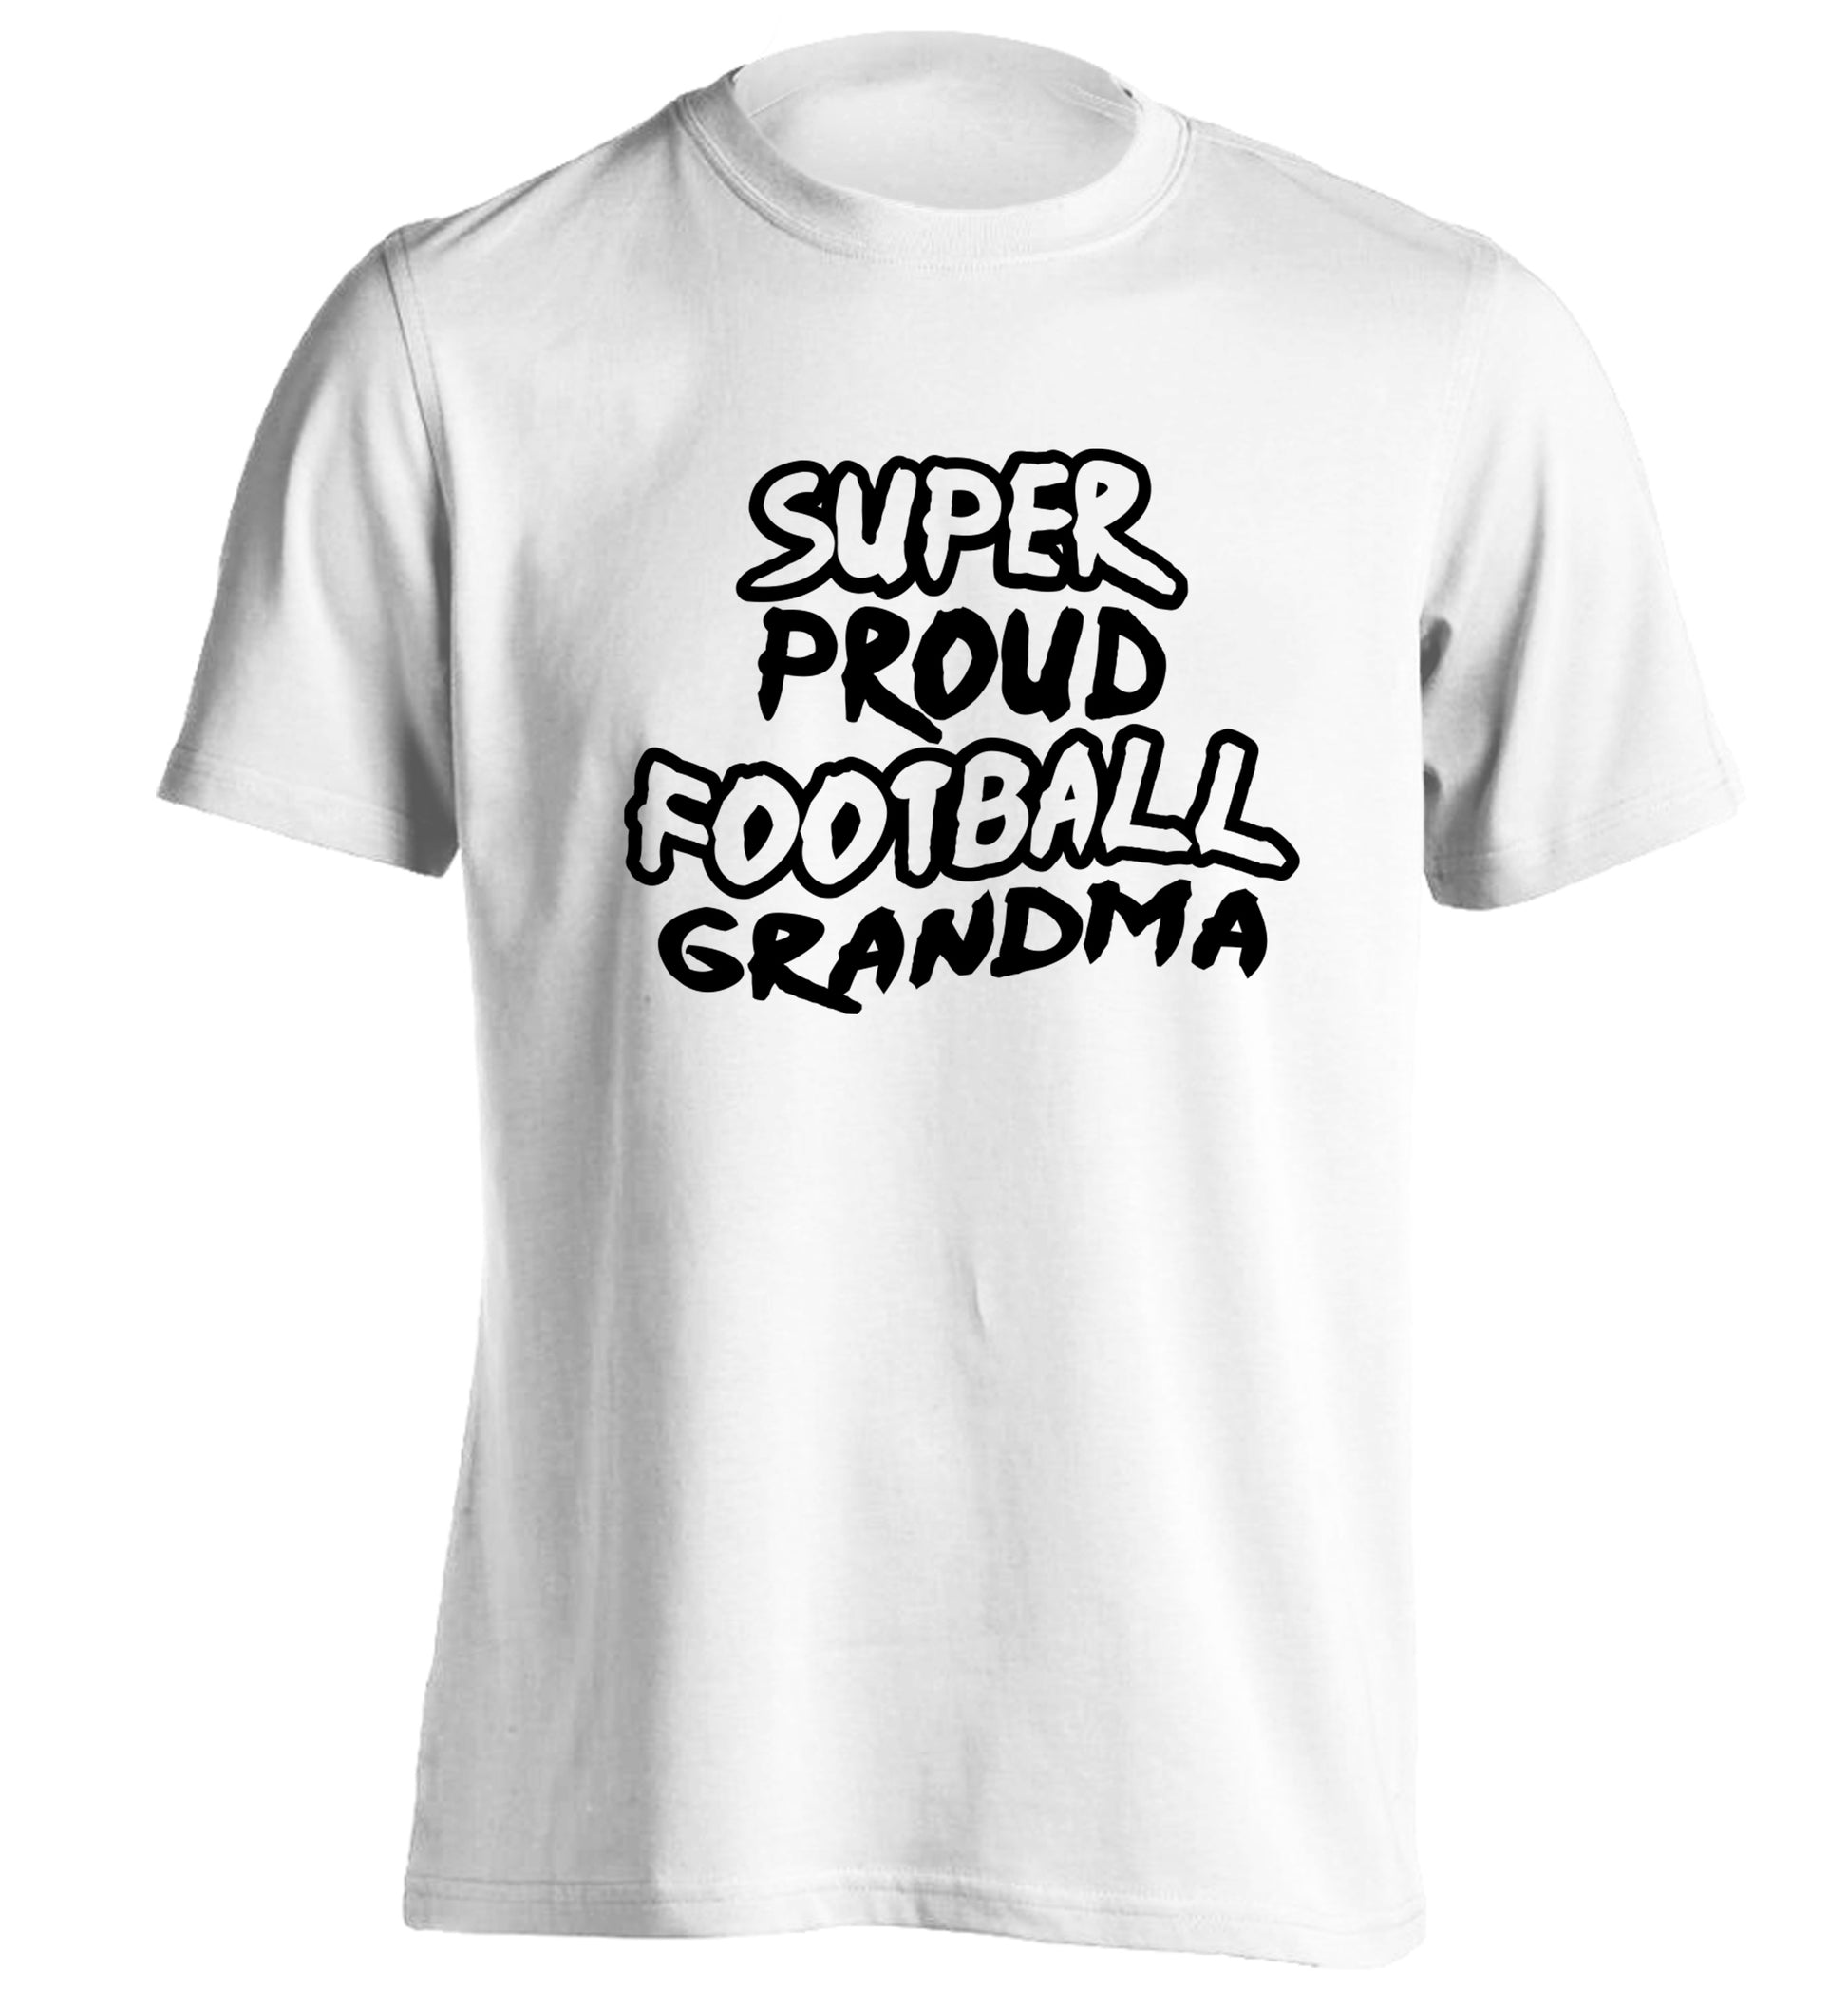 Super proud football grandma adults unisexwhite Tshirt 2XL